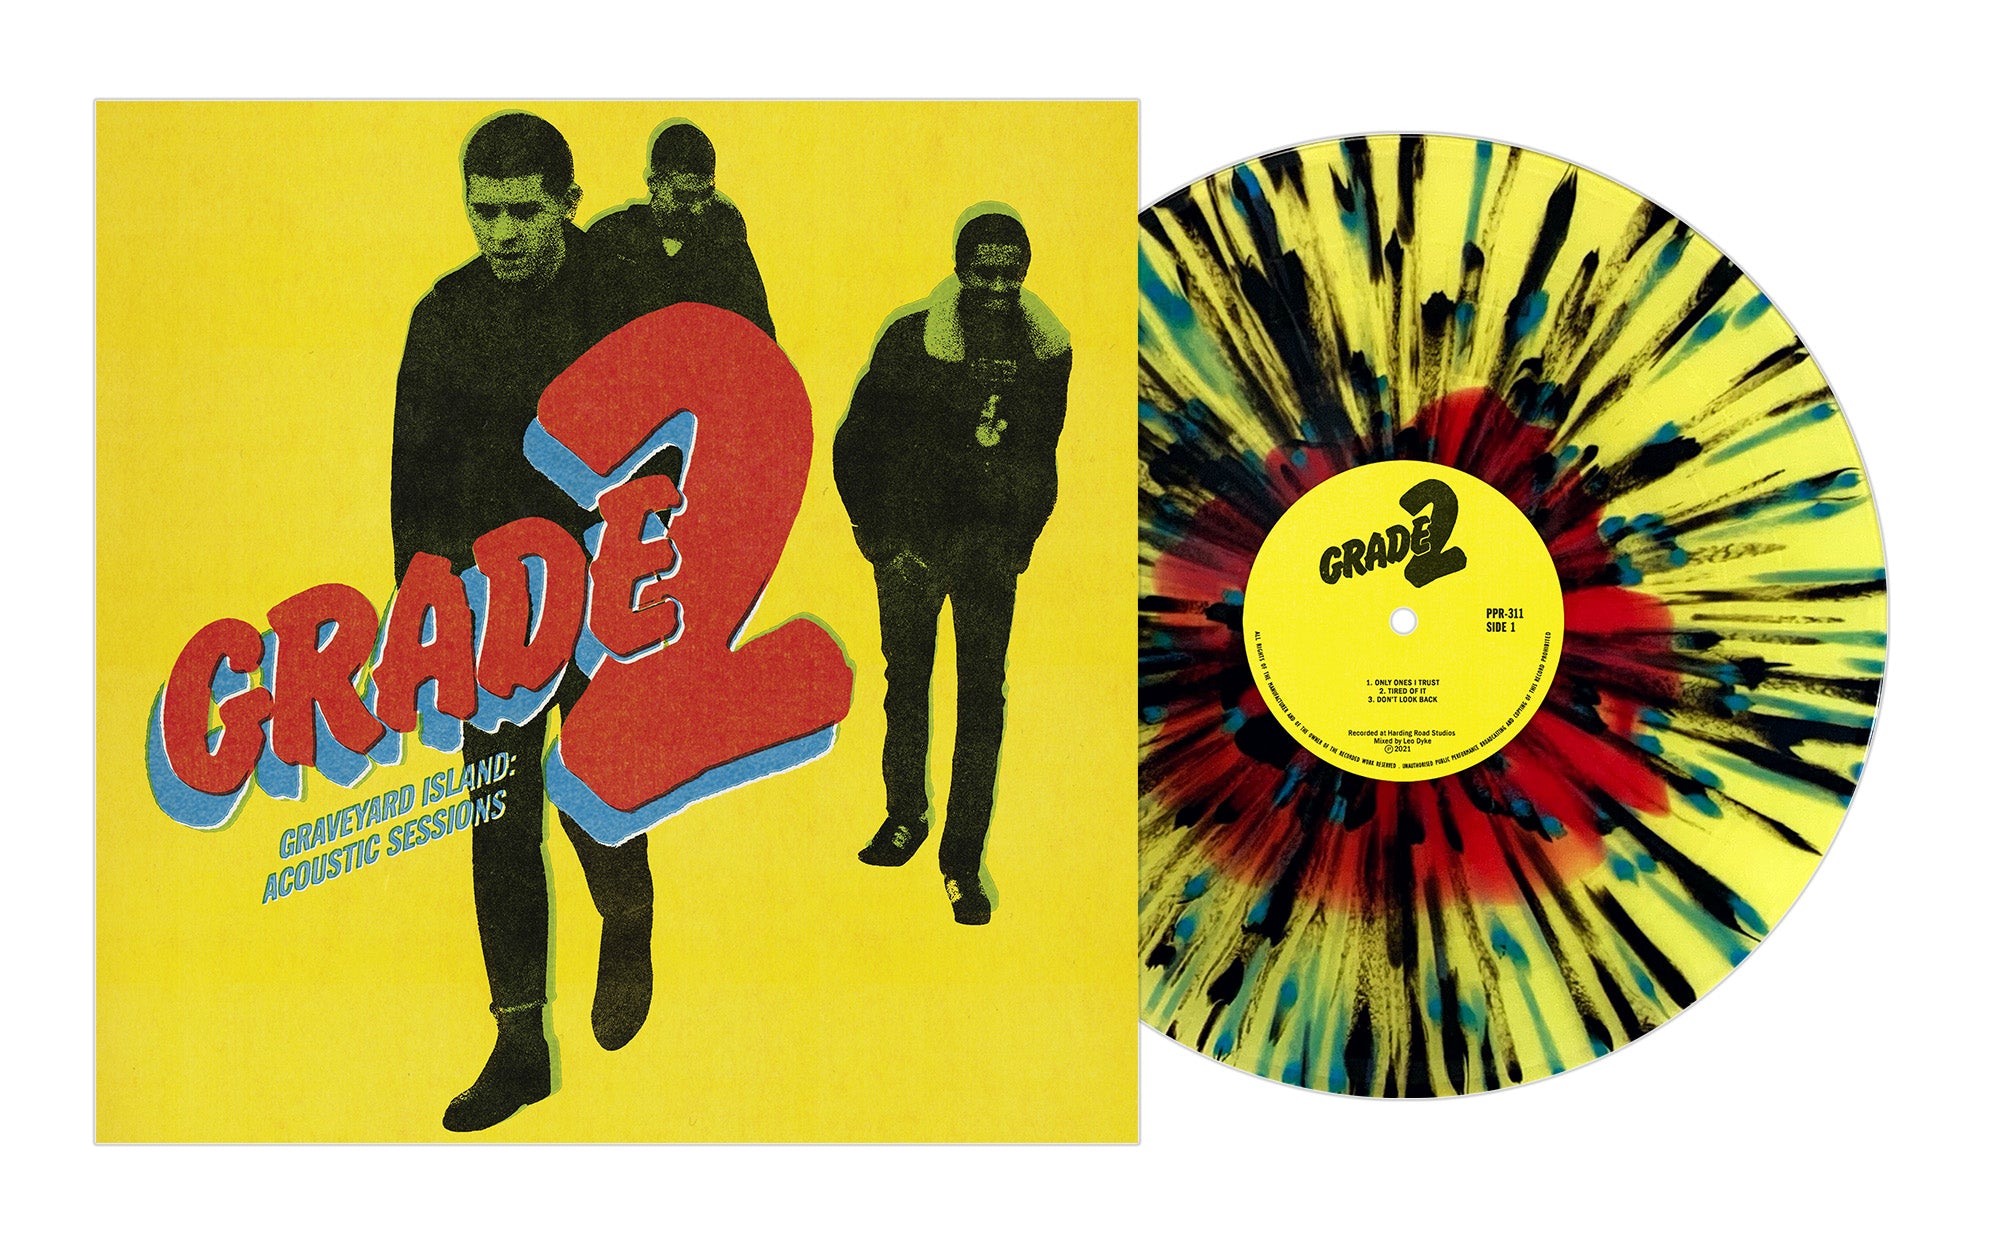 Grade 2 - Graveyard Island: Acoustic Sessions Red Inside Yellow W/ Blue & Black Splatter Vinyl LP